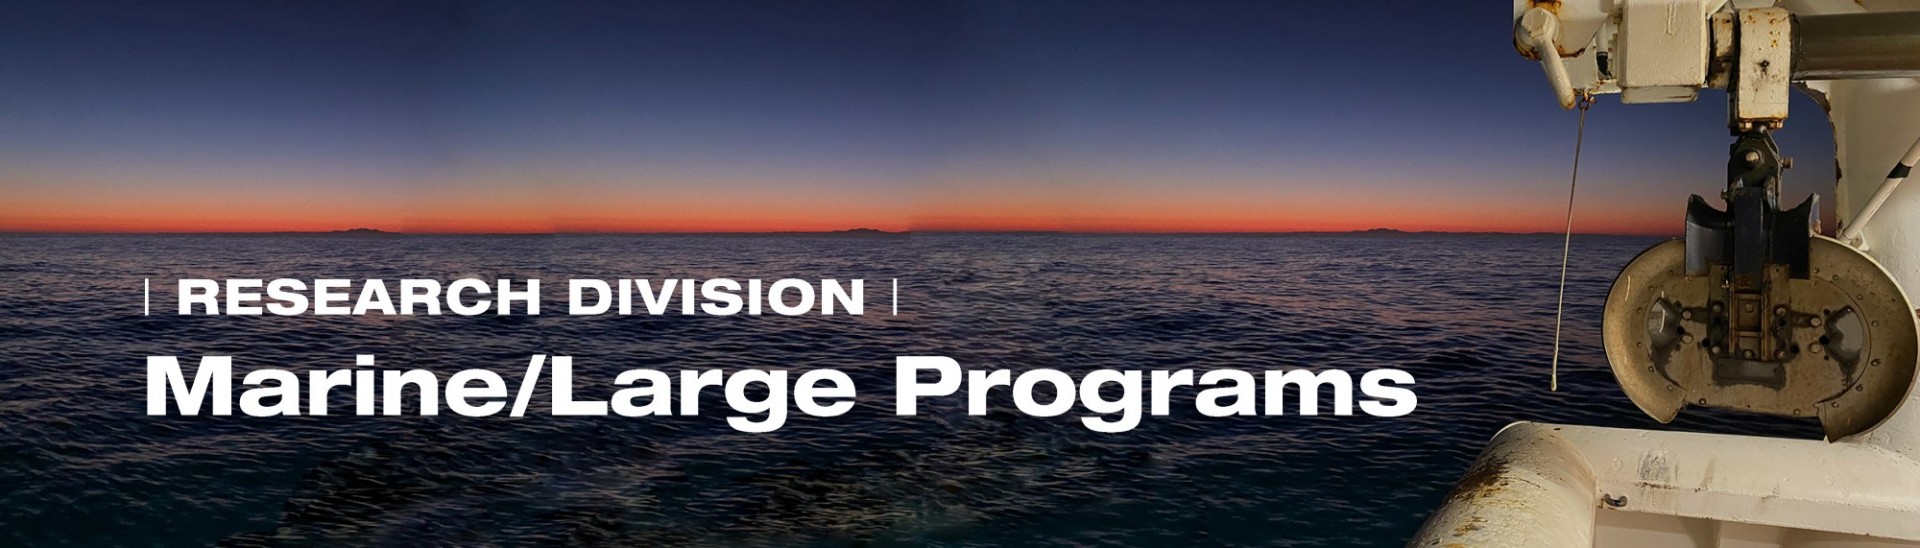 Marine/Large Programs Division